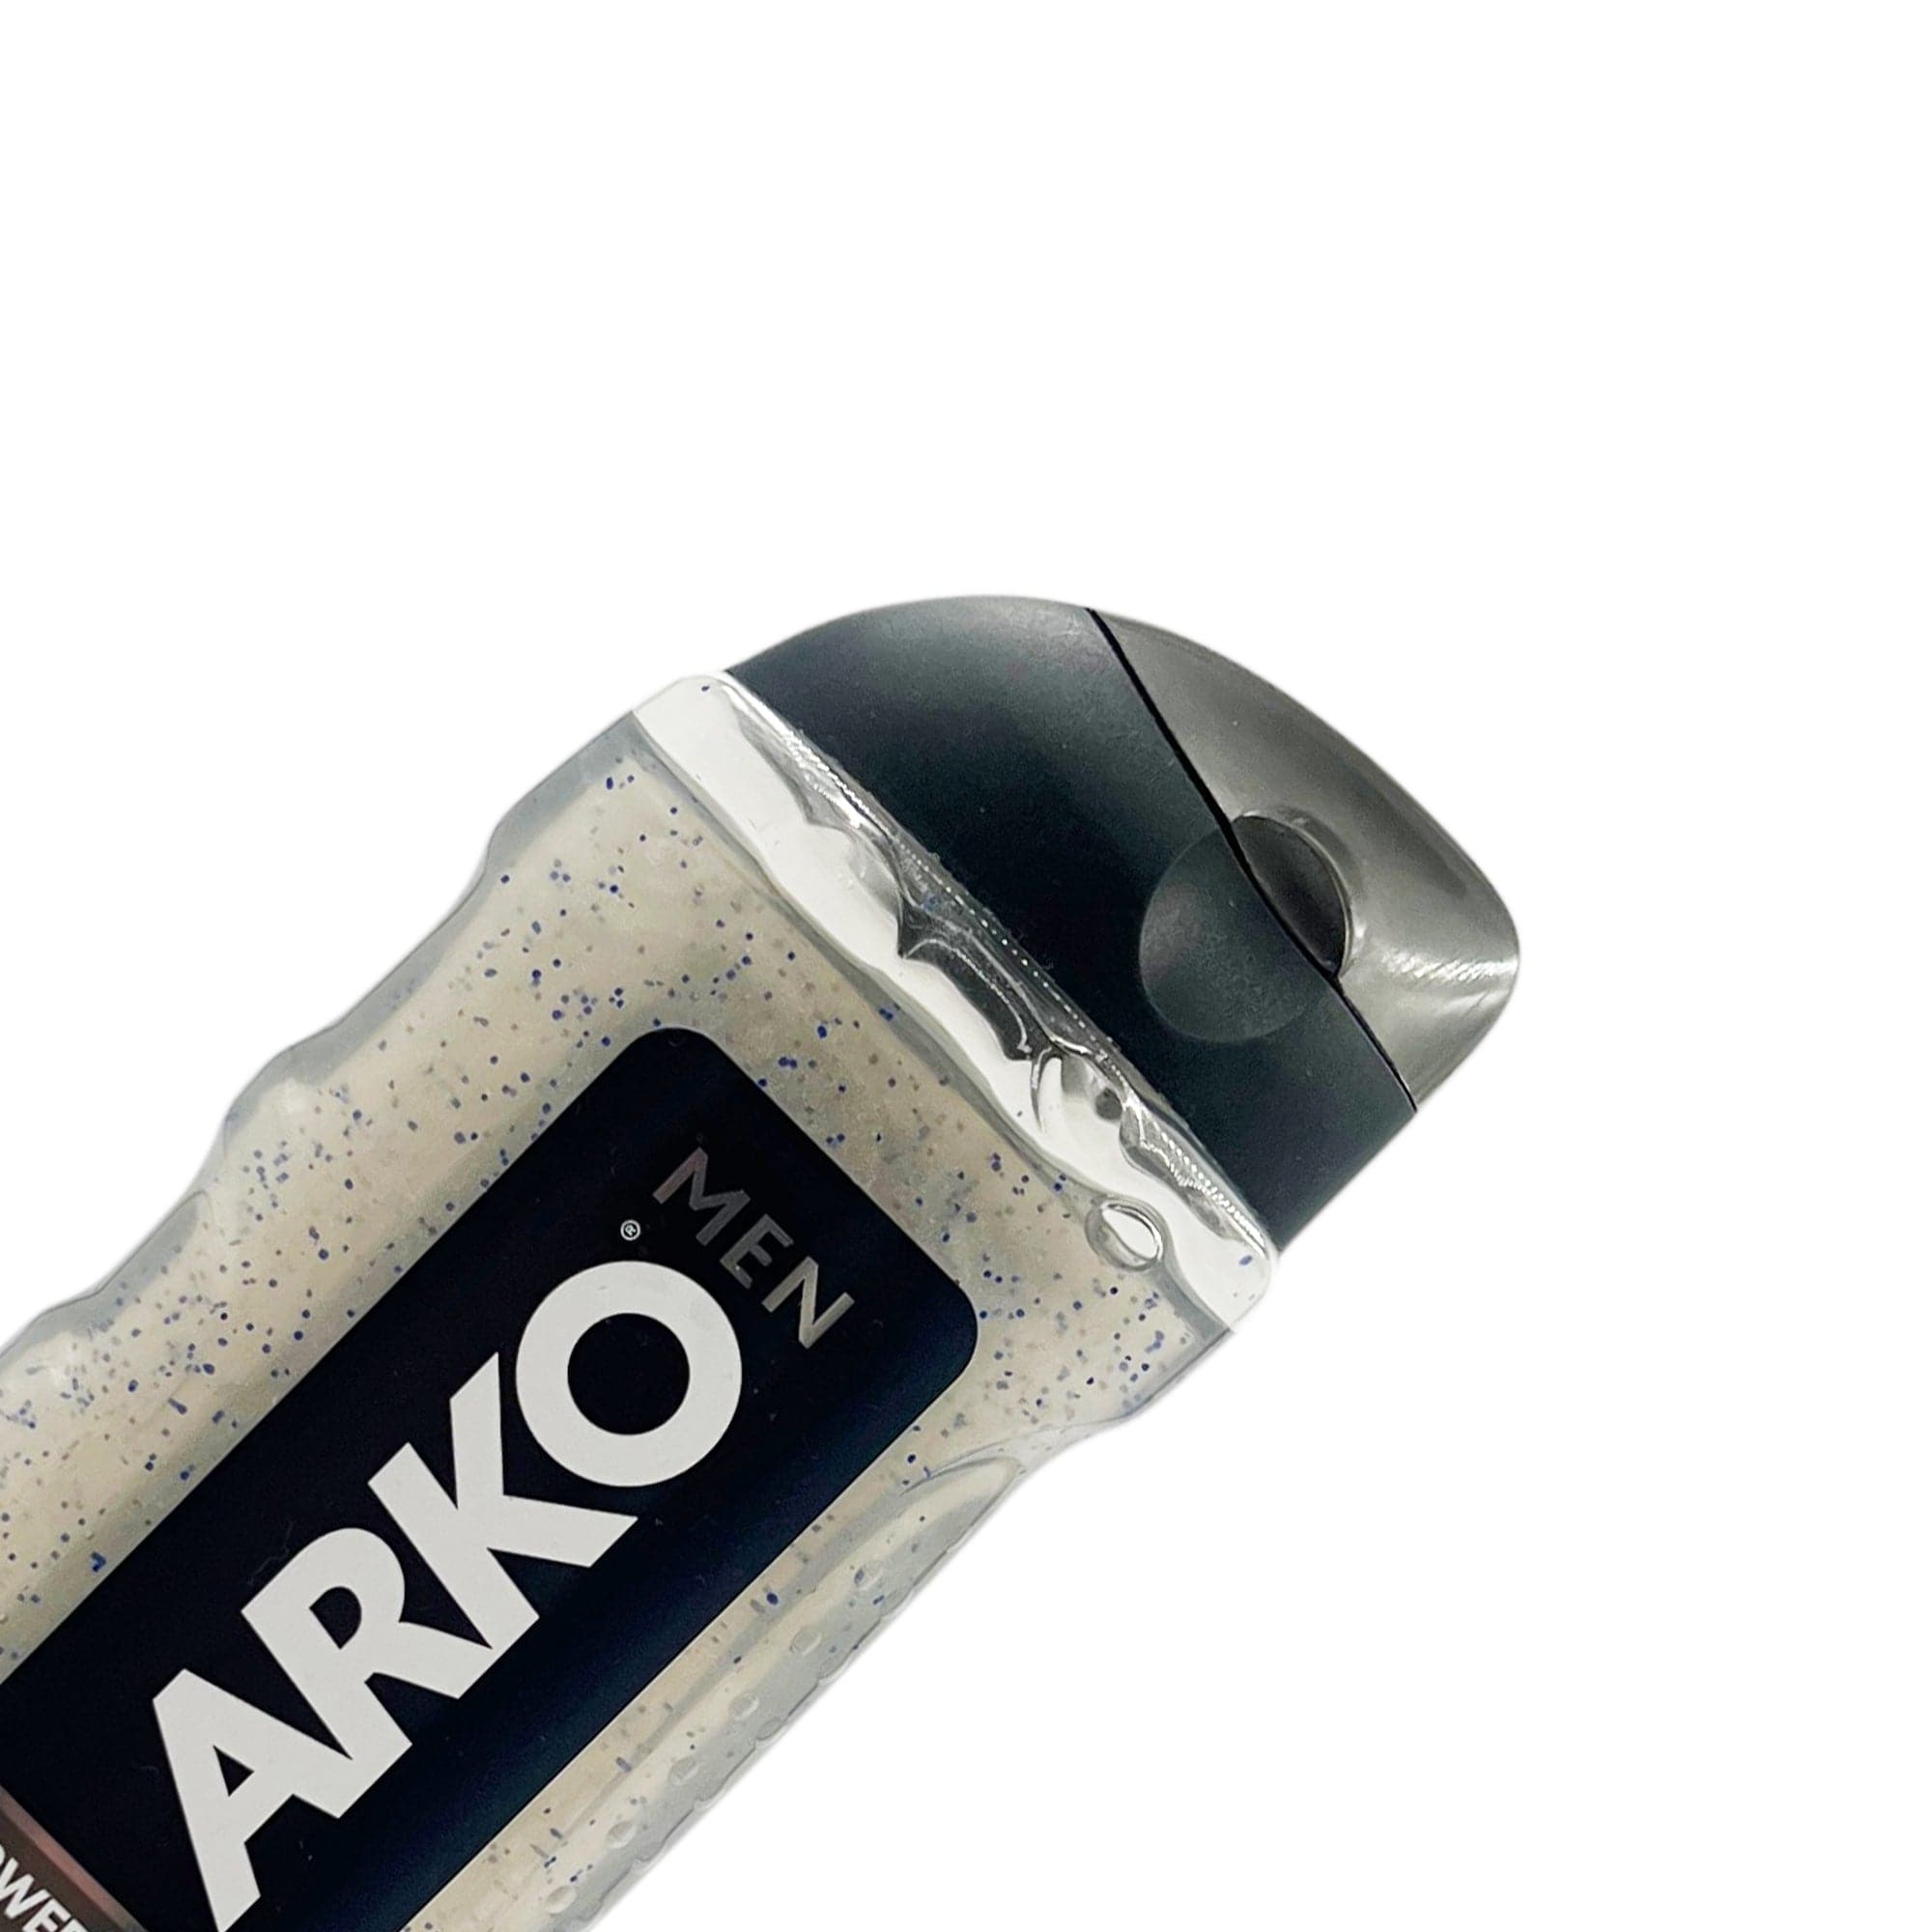 Arko - Men Shower Gel Platium 250ml - Eson Direct